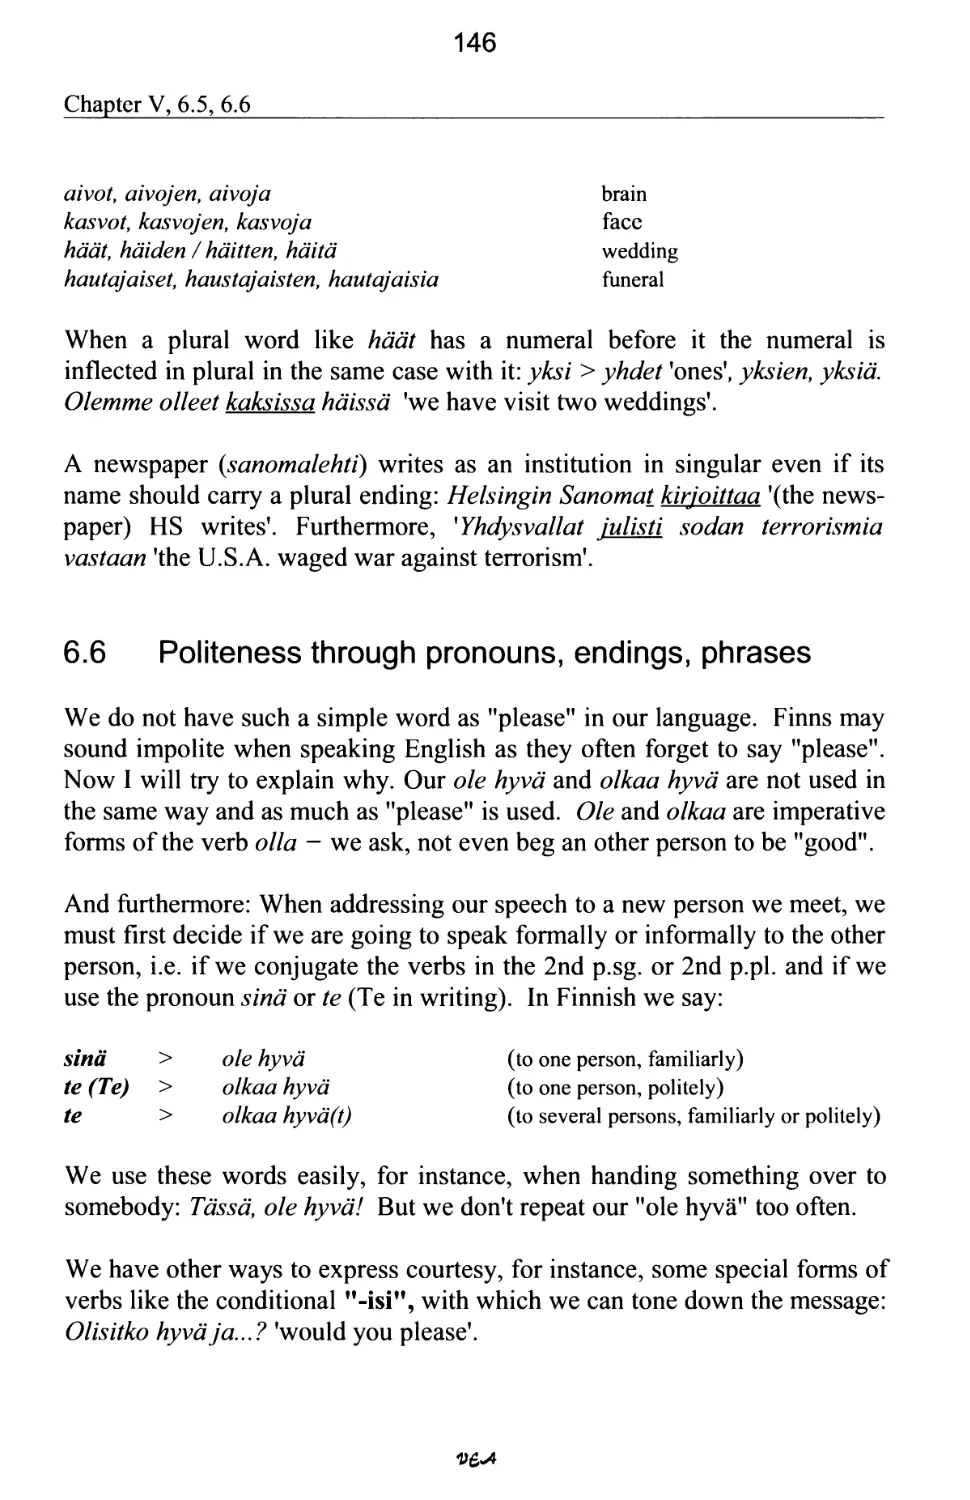 6.6 Politeness through pronouns, endings, phrases